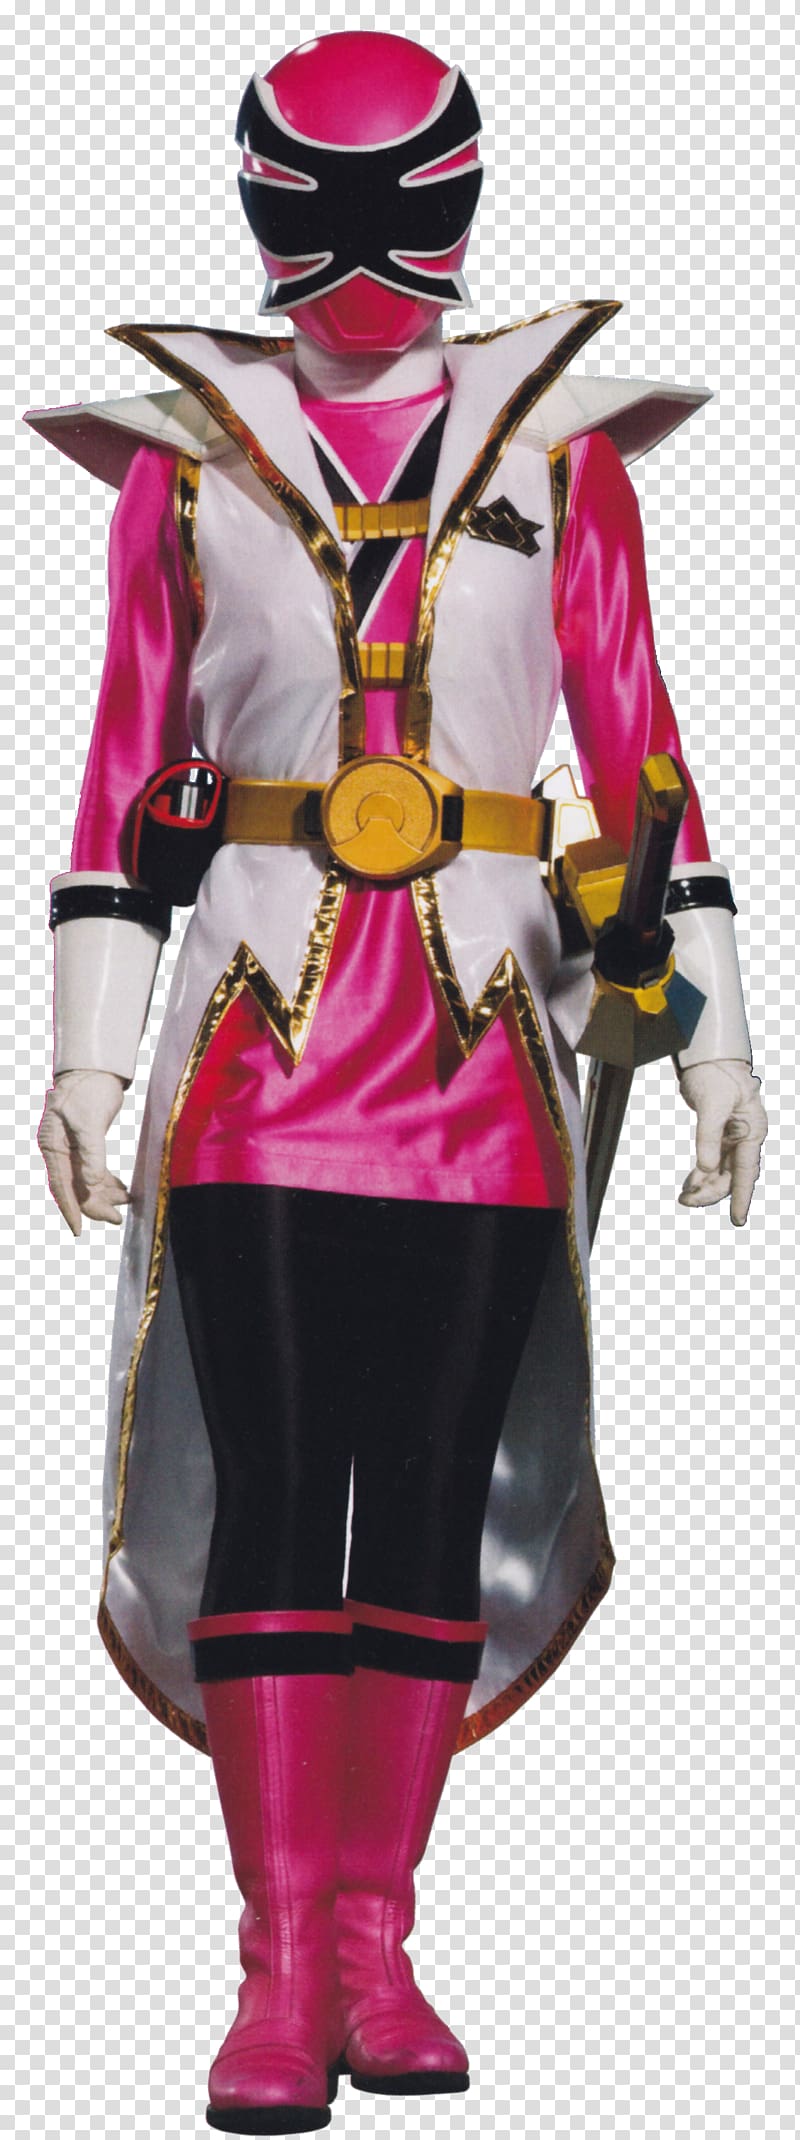 Kimberly Hart Power Rangers, Season 18 Billy Cranston Mako Shiraishi Pink, Power Rangers transparent background PNG clipart